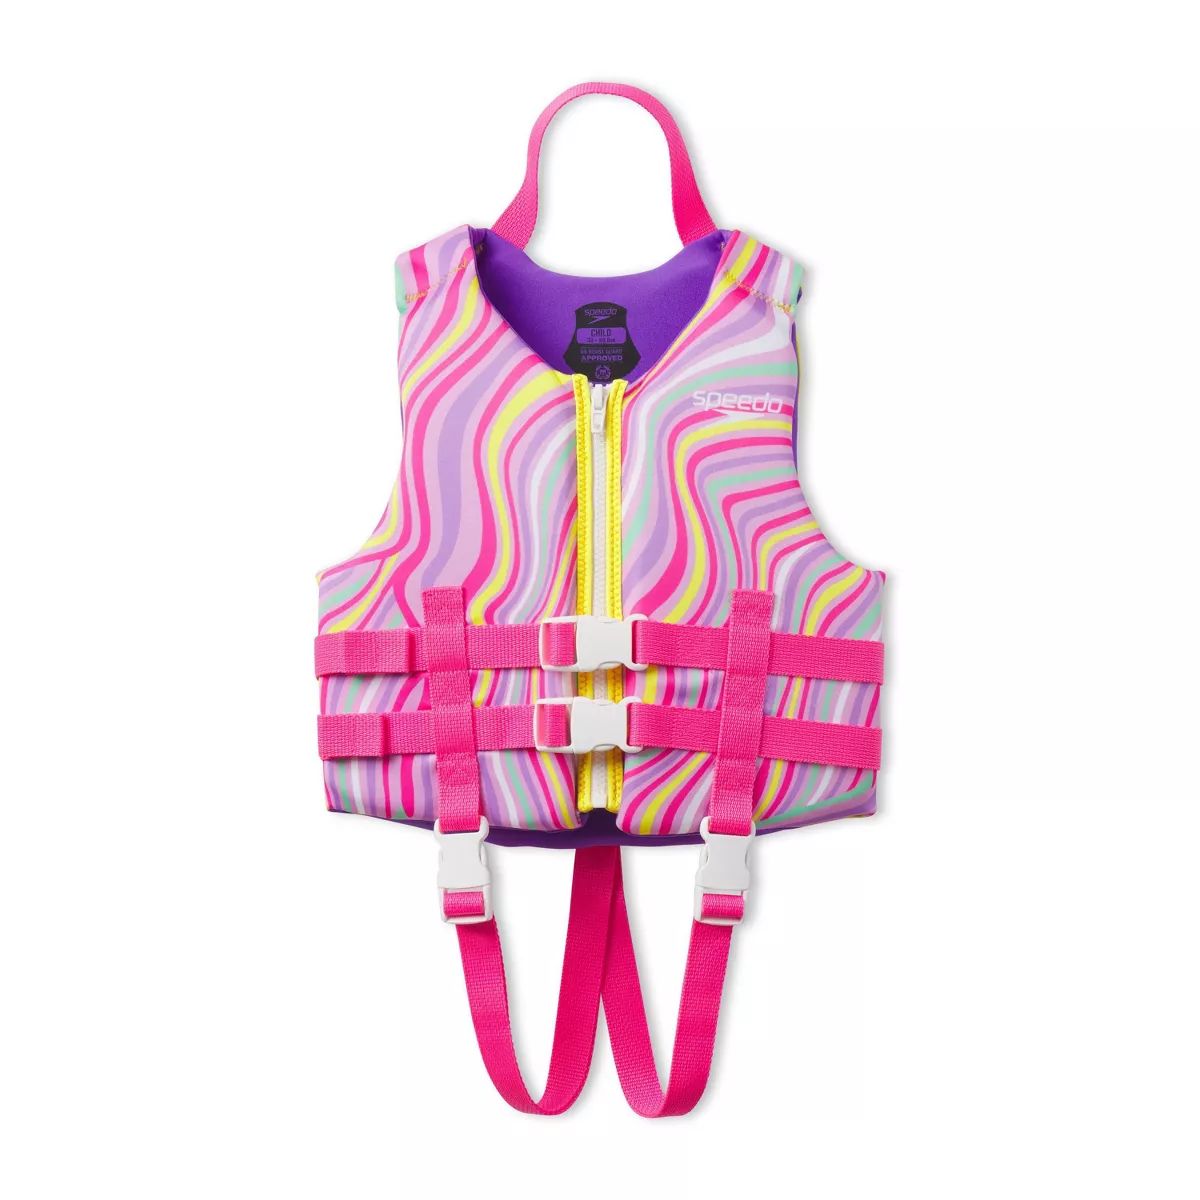 Speedo Kids' PFD Life Jacket Vest - Pink Swirl | Target